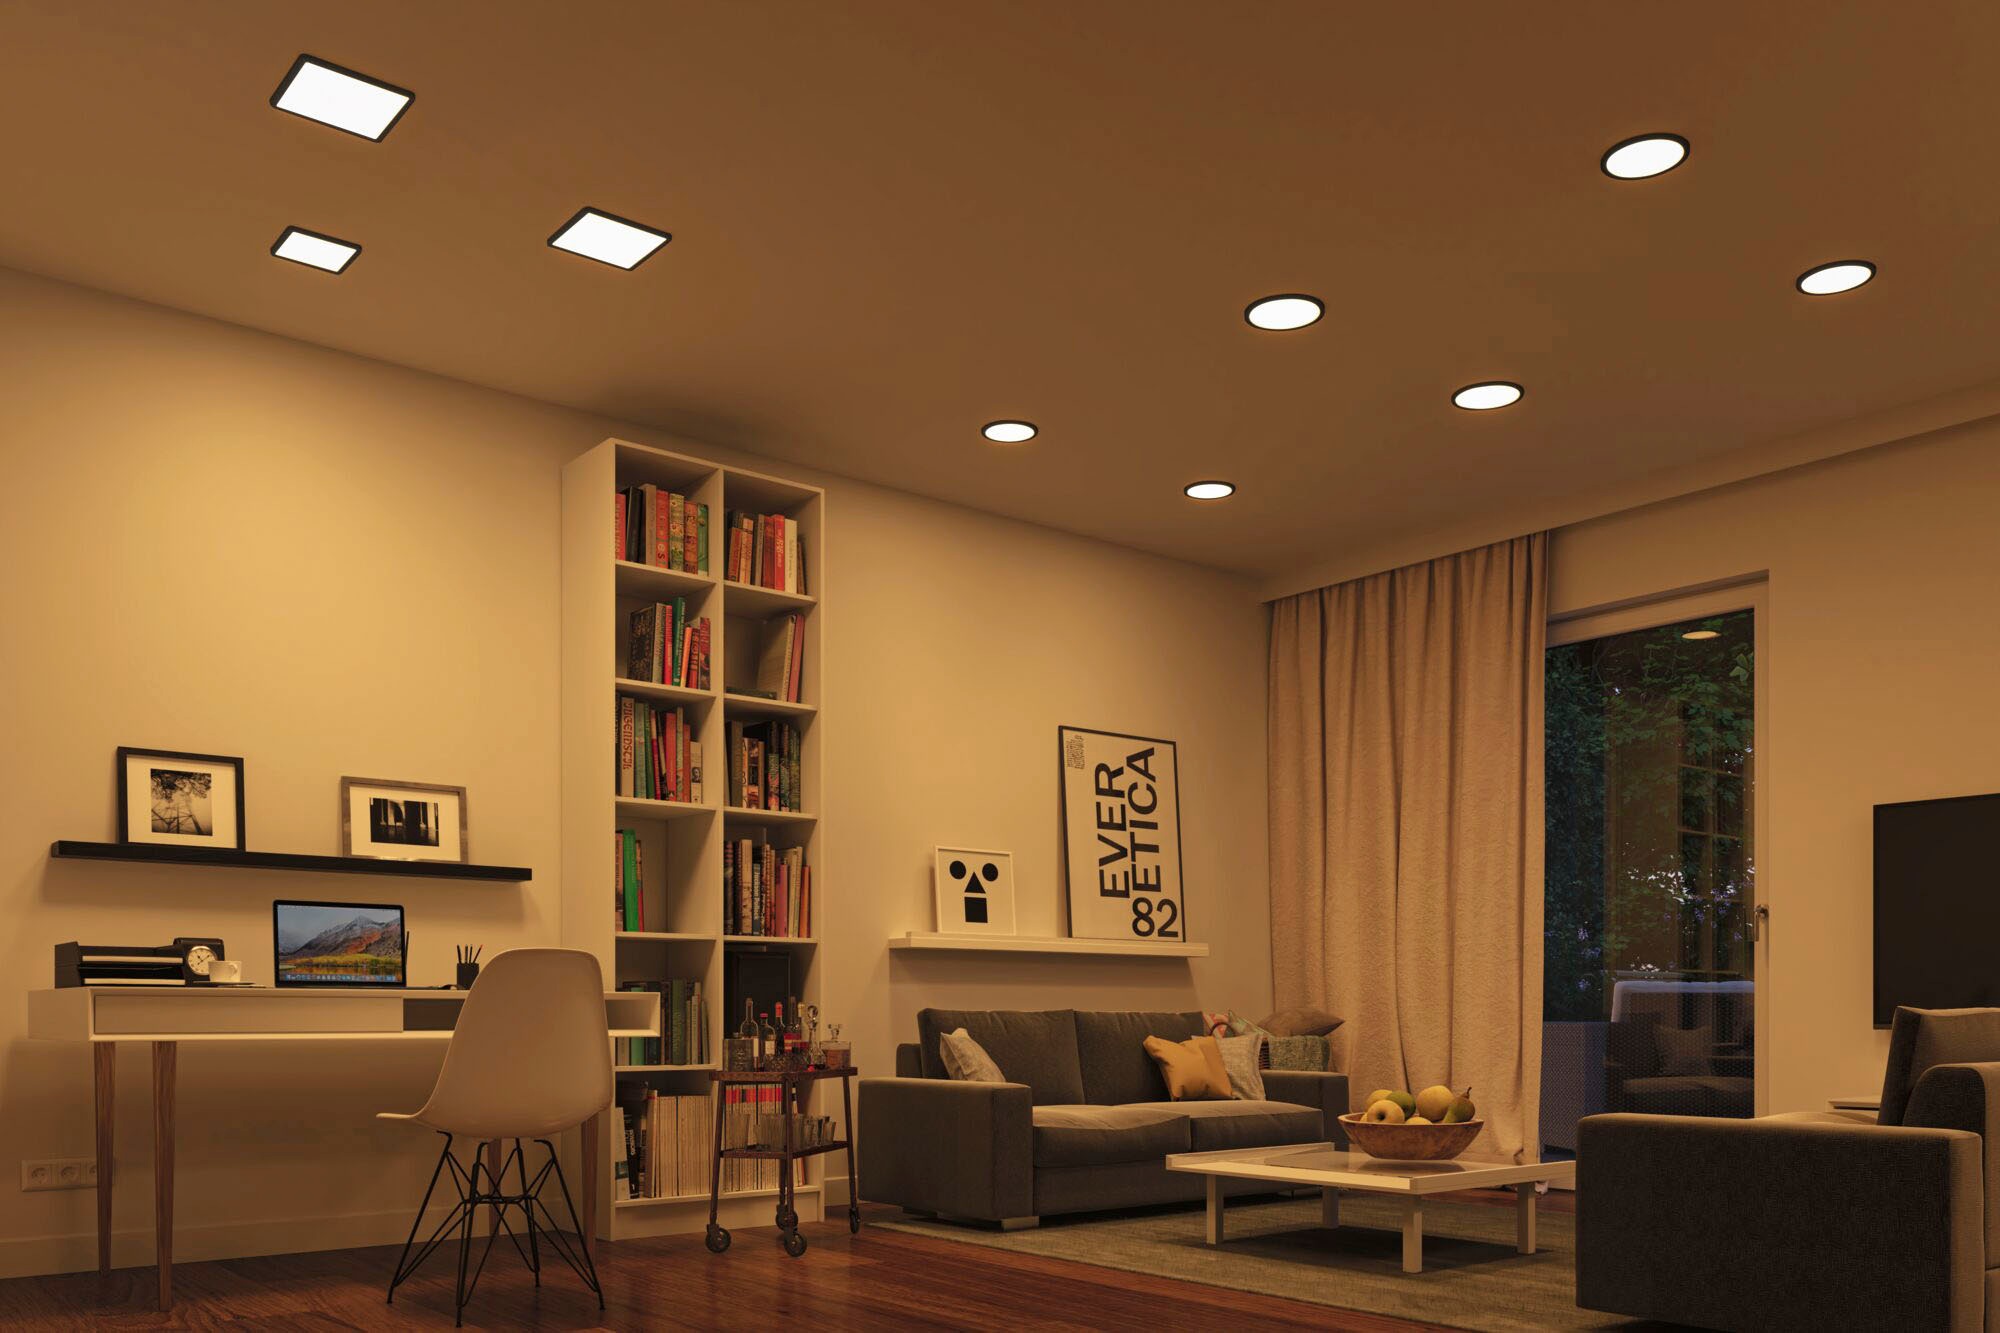 Paulmann LED Einbauleuchte »Areo«, Schutzart IP44 spritzwassergeschützt, Smart Home, dimmbar, Gr. ca. 23,0 x 23,0 cm